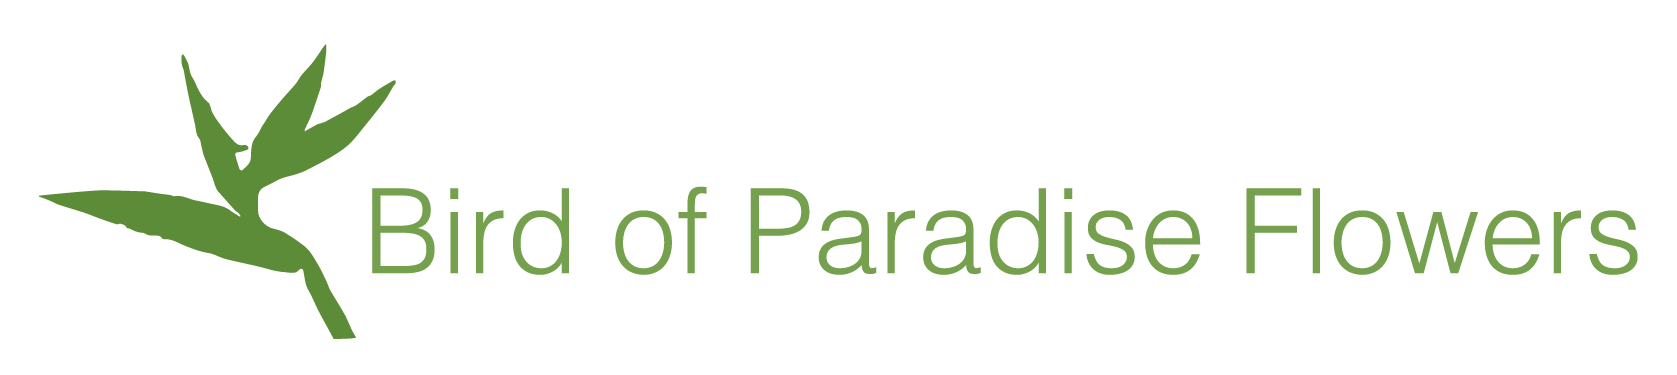 Bird of Paradise Logo - Bristol Florist Bird Of Paradise Flowers Voted #1 Best Florist